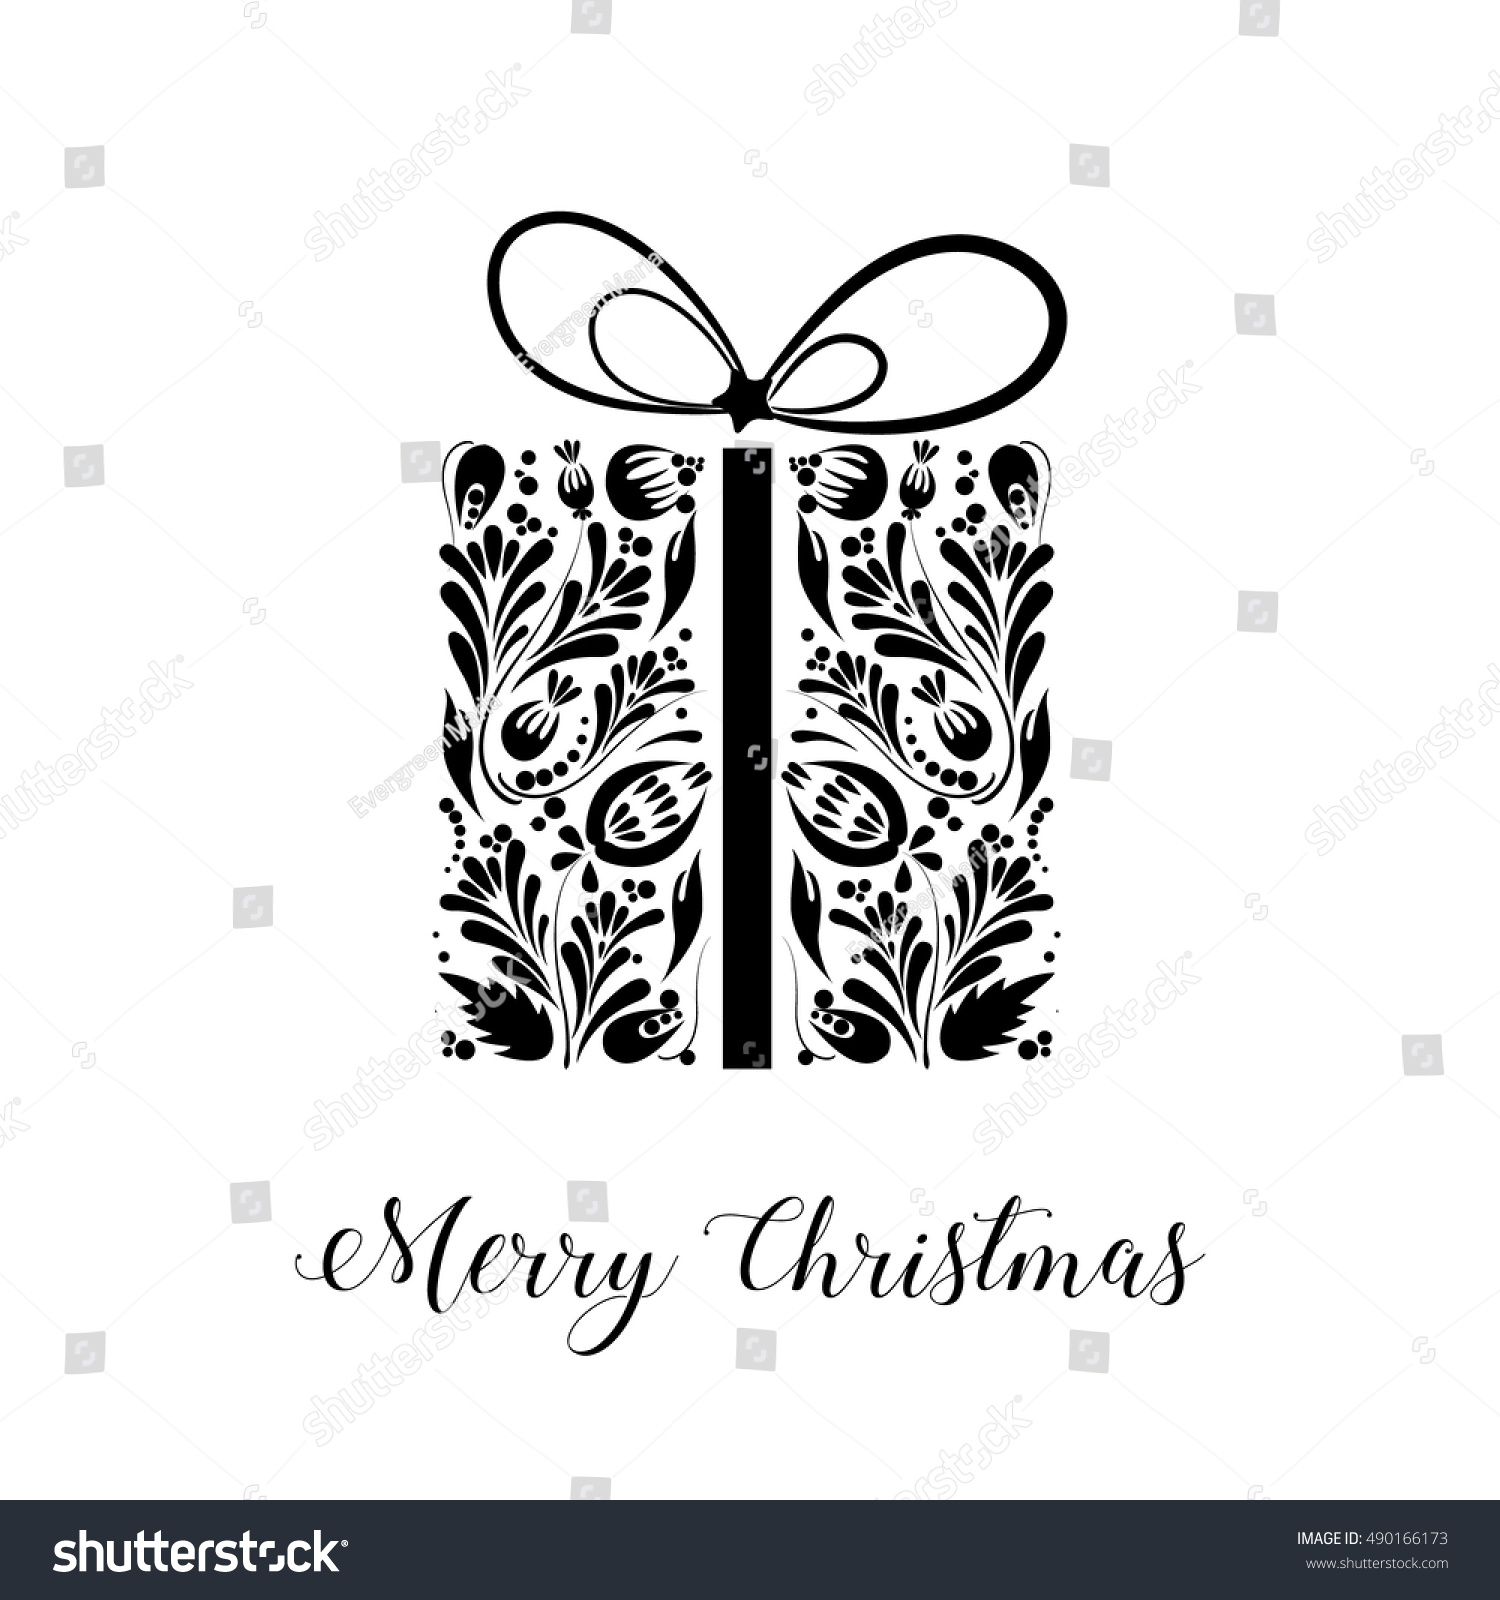 Merry Christmas Black White Christmas Card Stock Vector Royalty Free 490166173